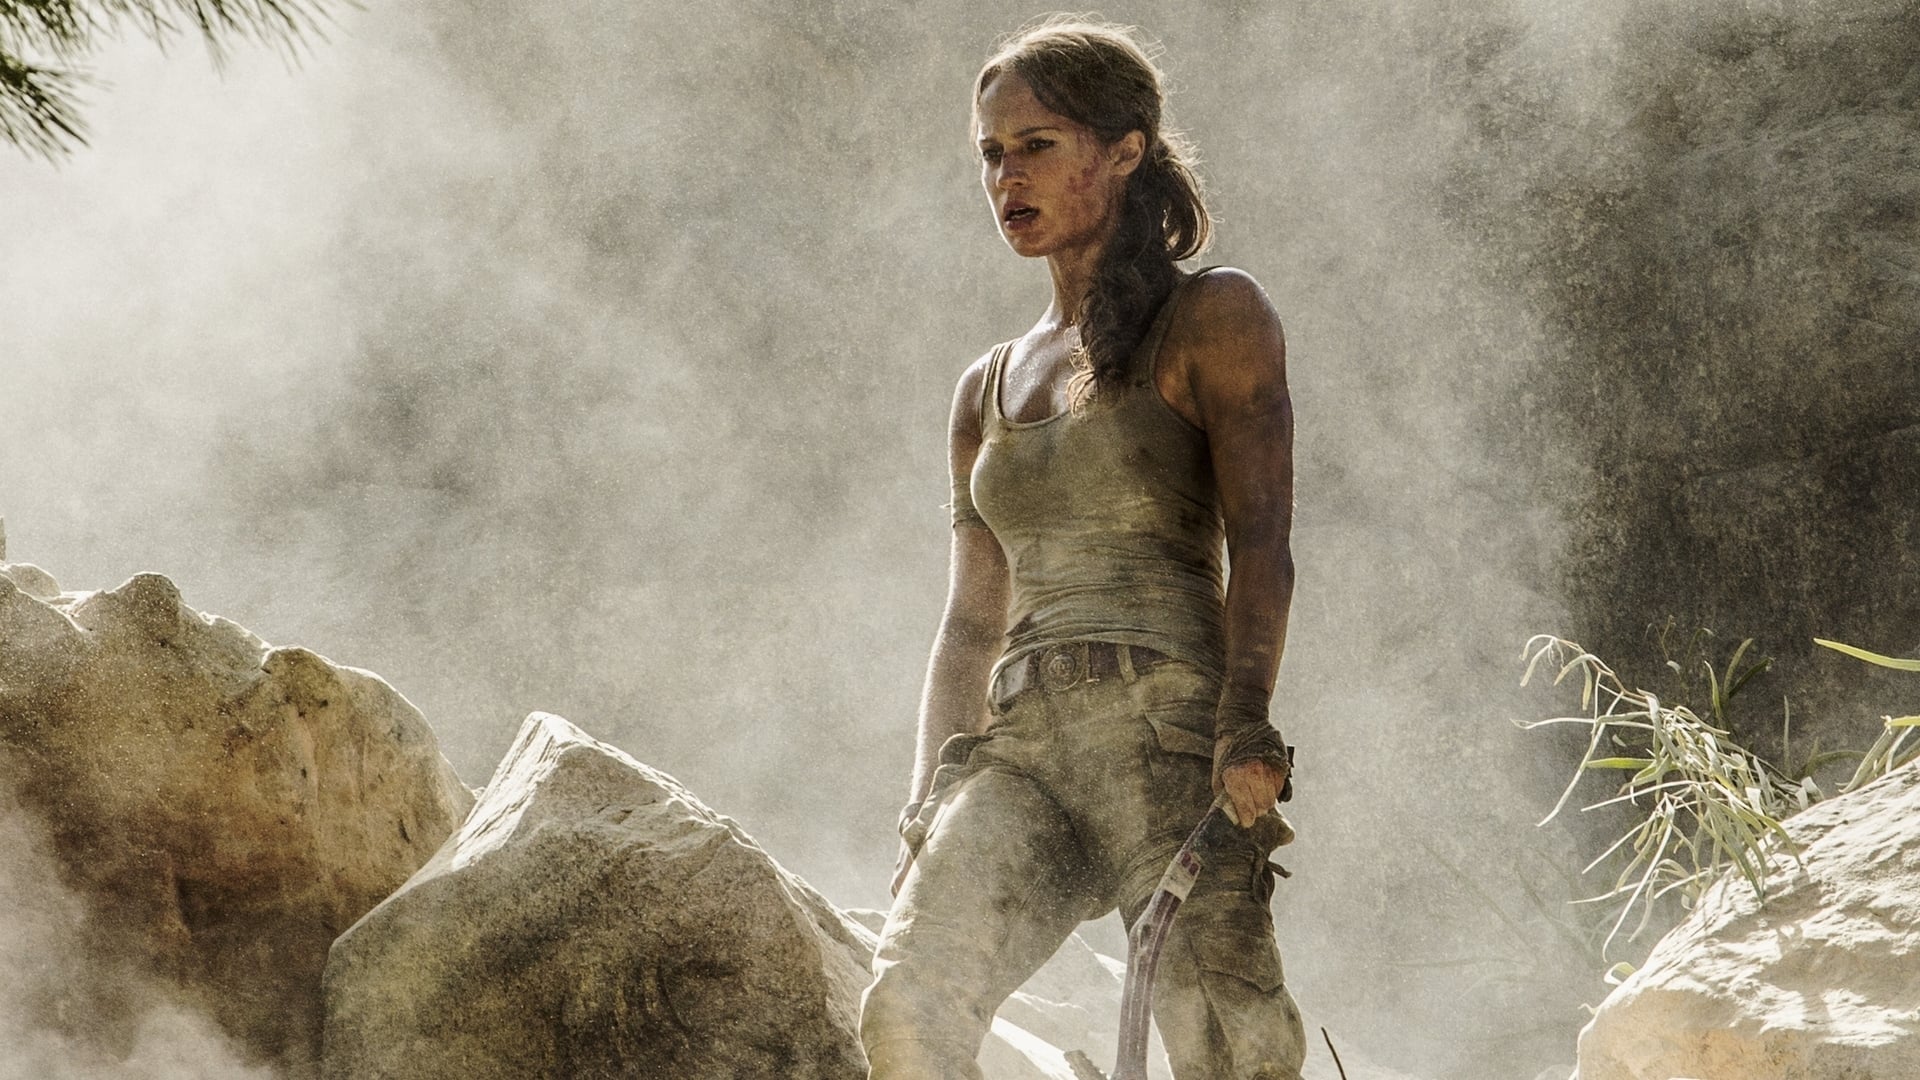 Image du film Tomb Raider sf1ugnby5qvxv9t1p7judz93ebwjpg